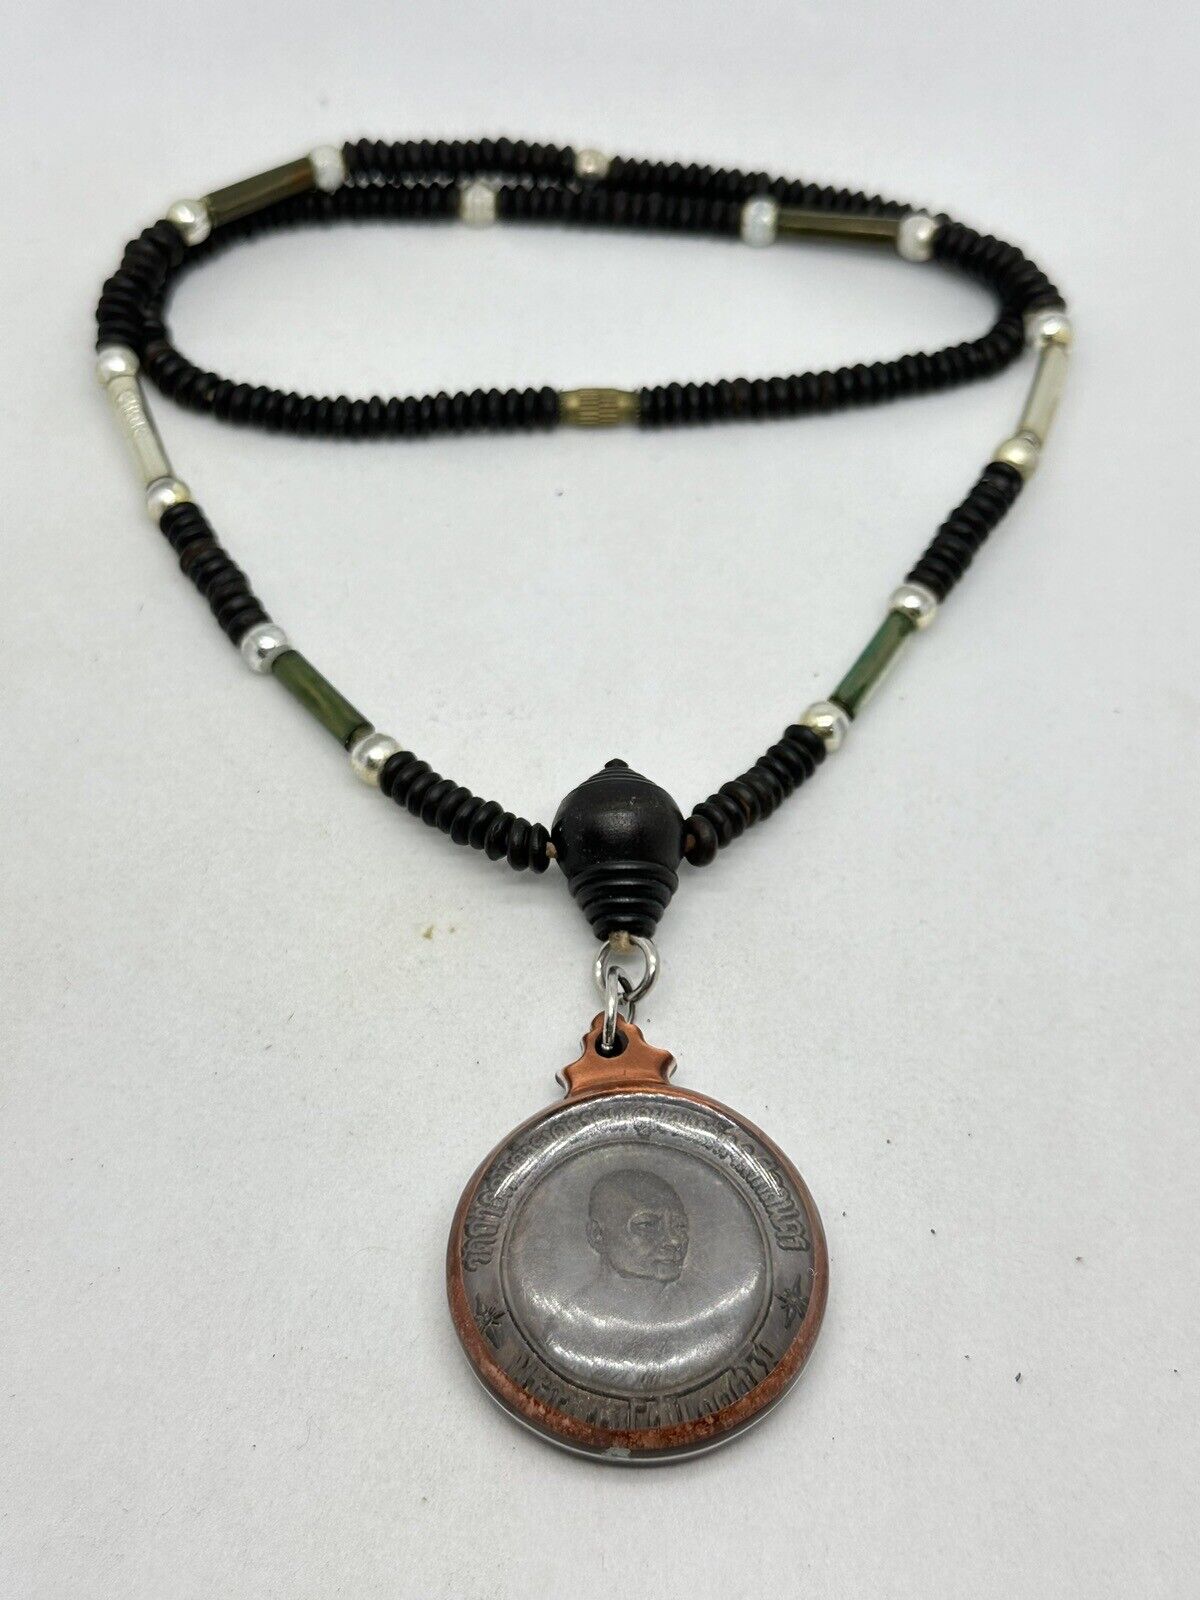 Vintage Talisman Thai Buddha Coin Amulet Pendant Necklace ~ 24 inches